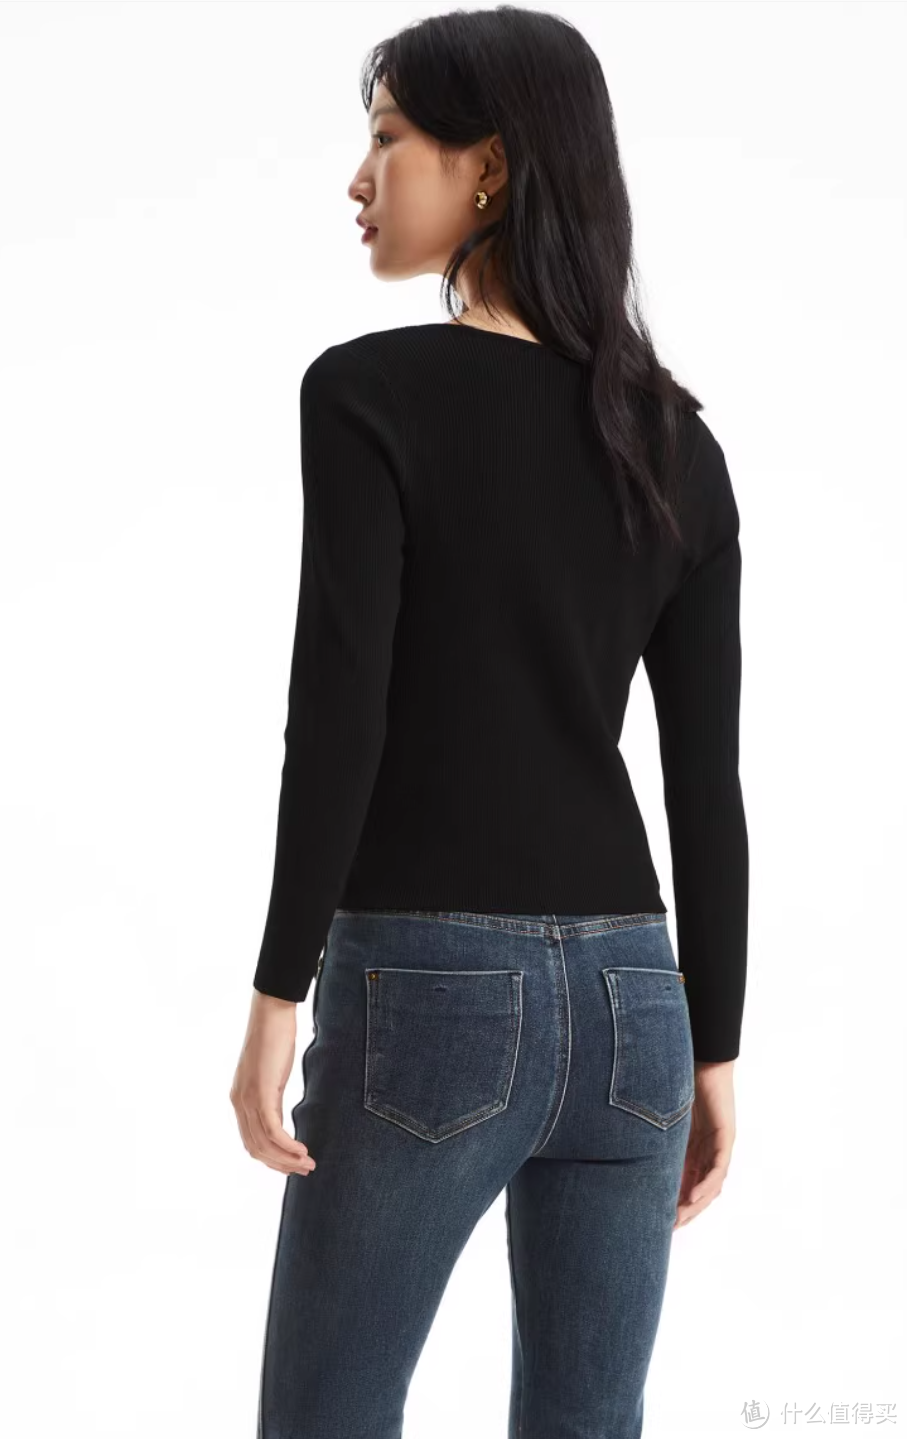 Vero Moda针织衫女 新款修身合体版型长袖休闲内搭打底——春季出街新选择🍃